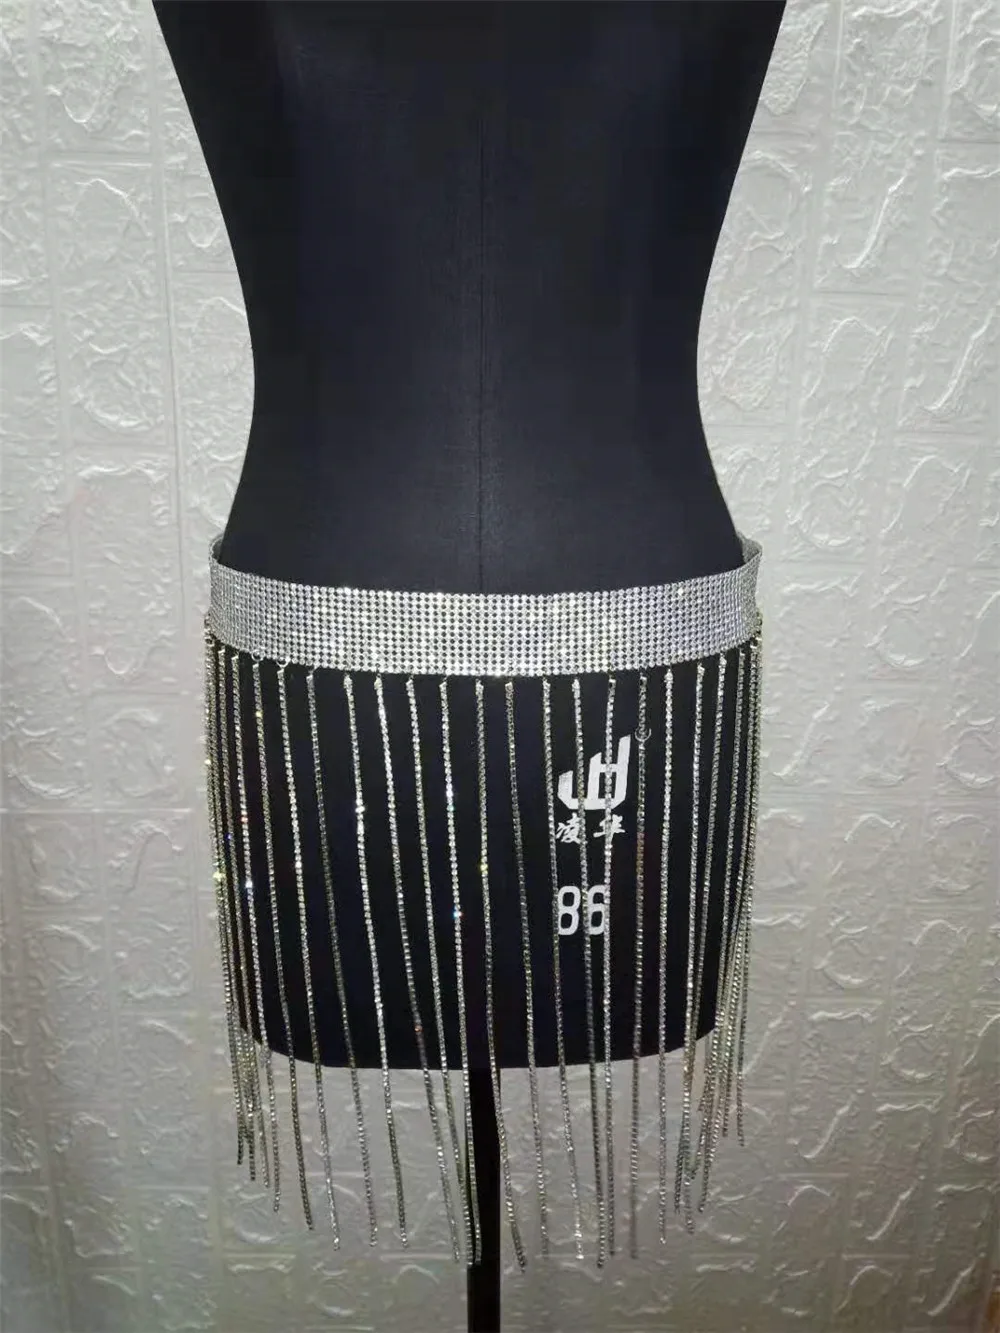 Shd901 Women Crystal Tassel Skirt Bling Rhinestone Club Wear Mini Party ...